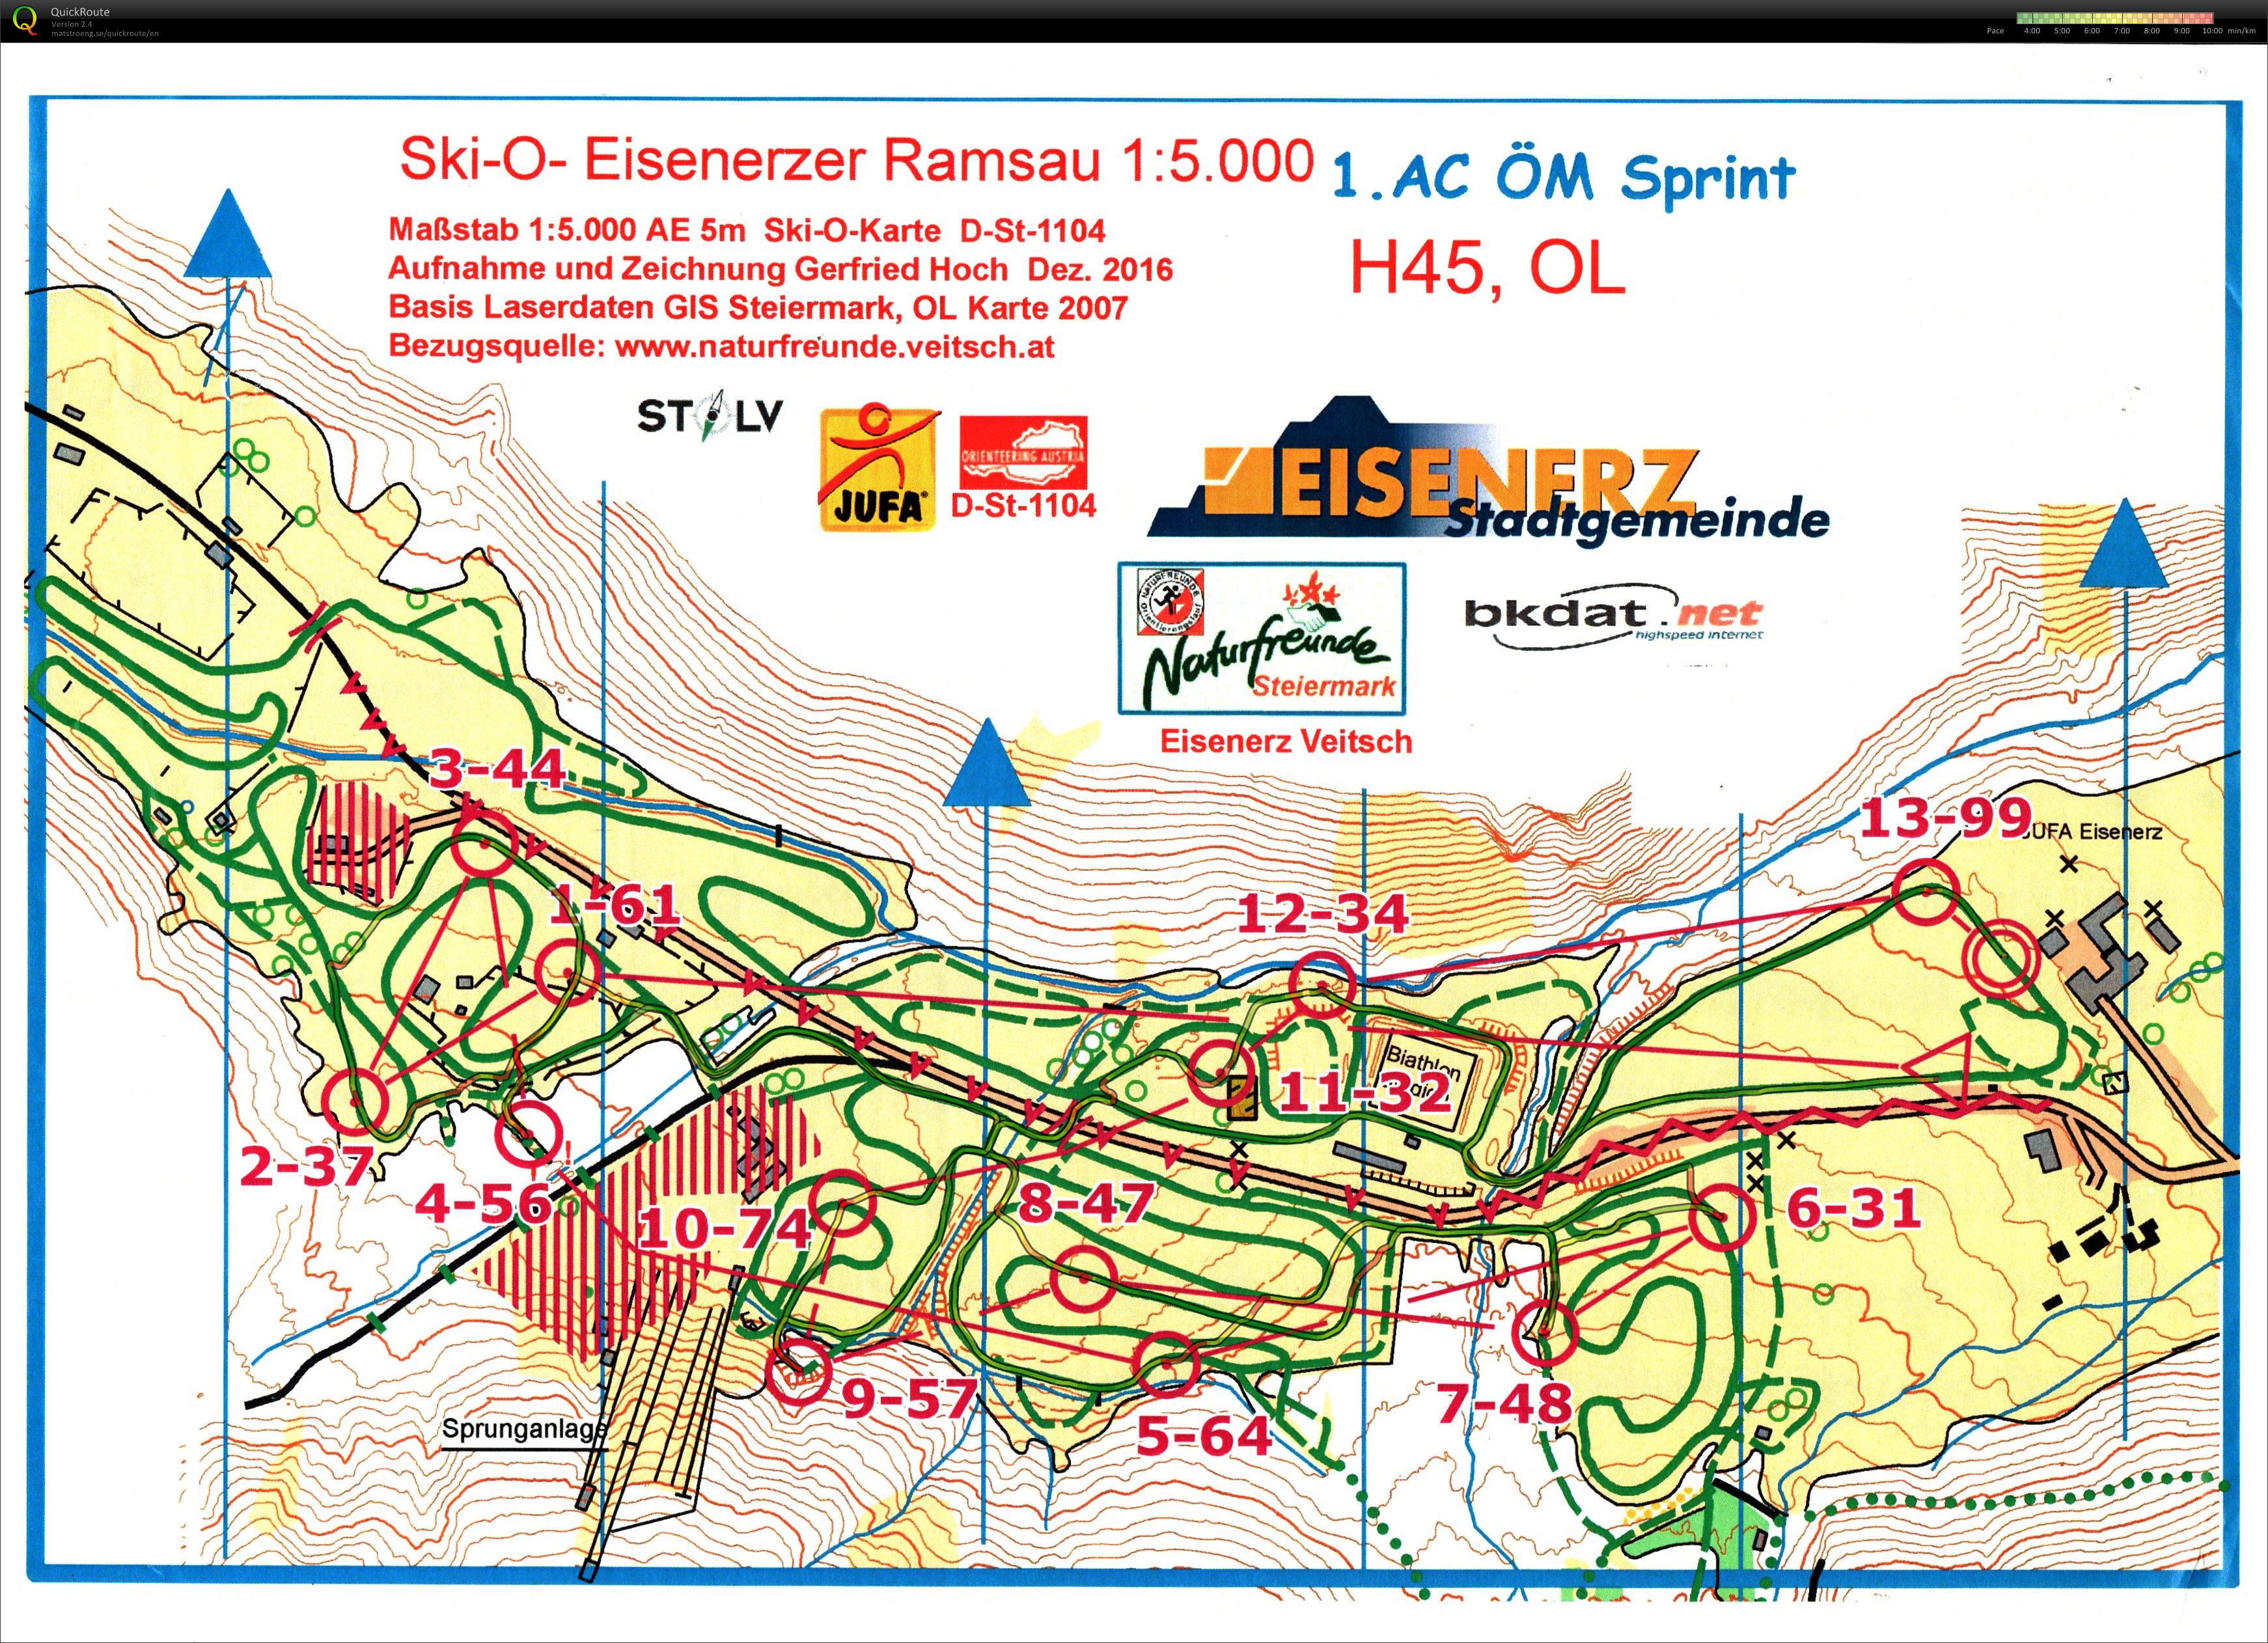 ÖM Sprint, 1. Ski-O Austria Cup (17-12-2016)